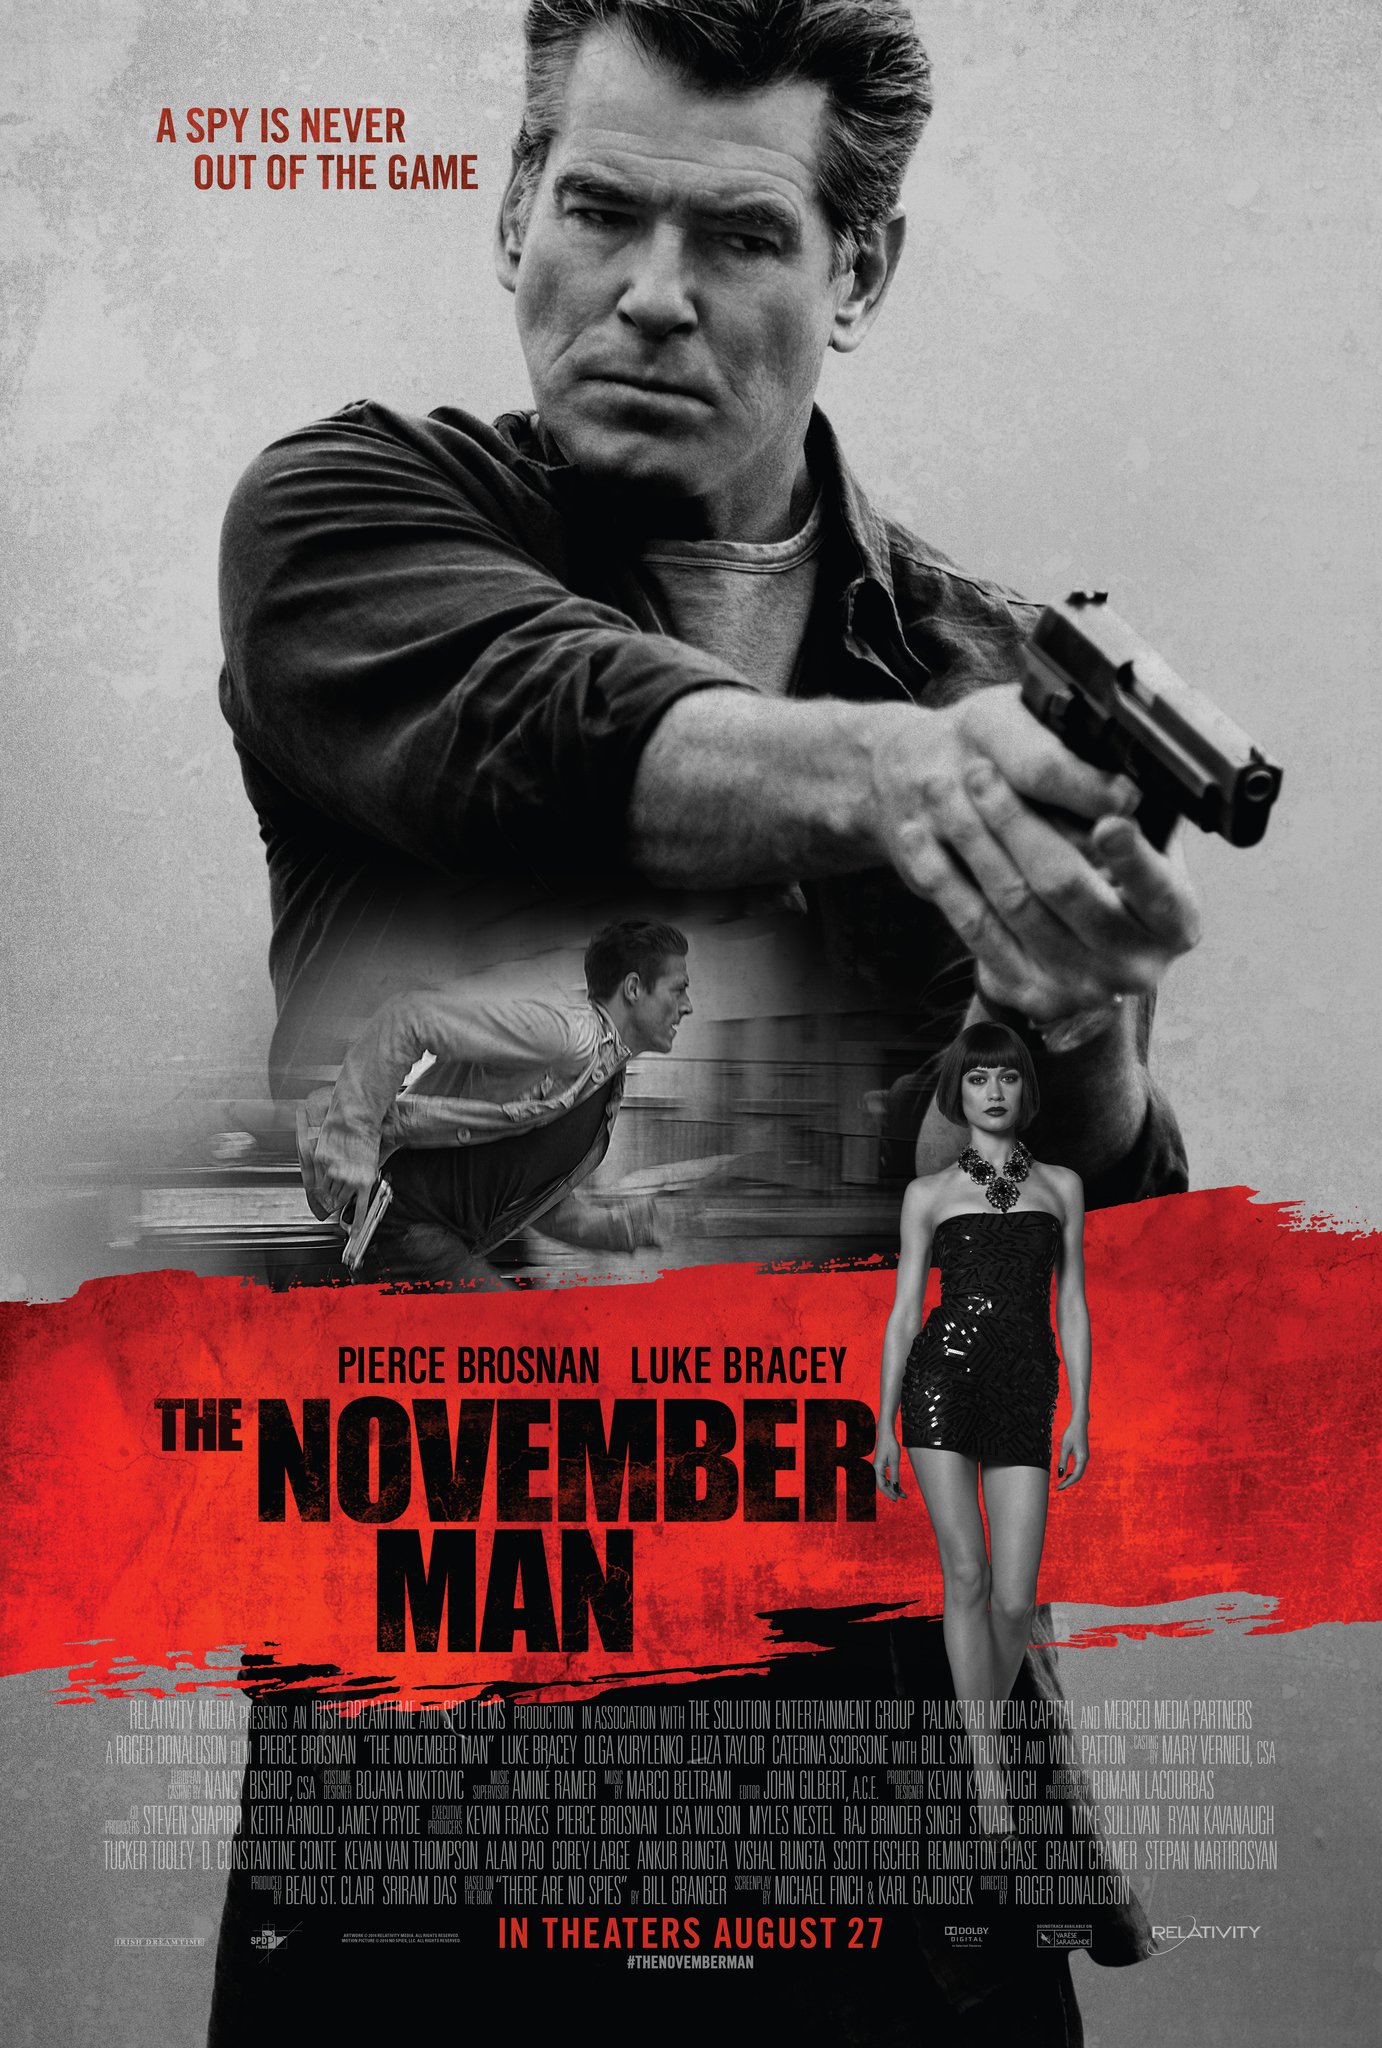 The November Man (2014) - Score Mixer &amp; Recordist